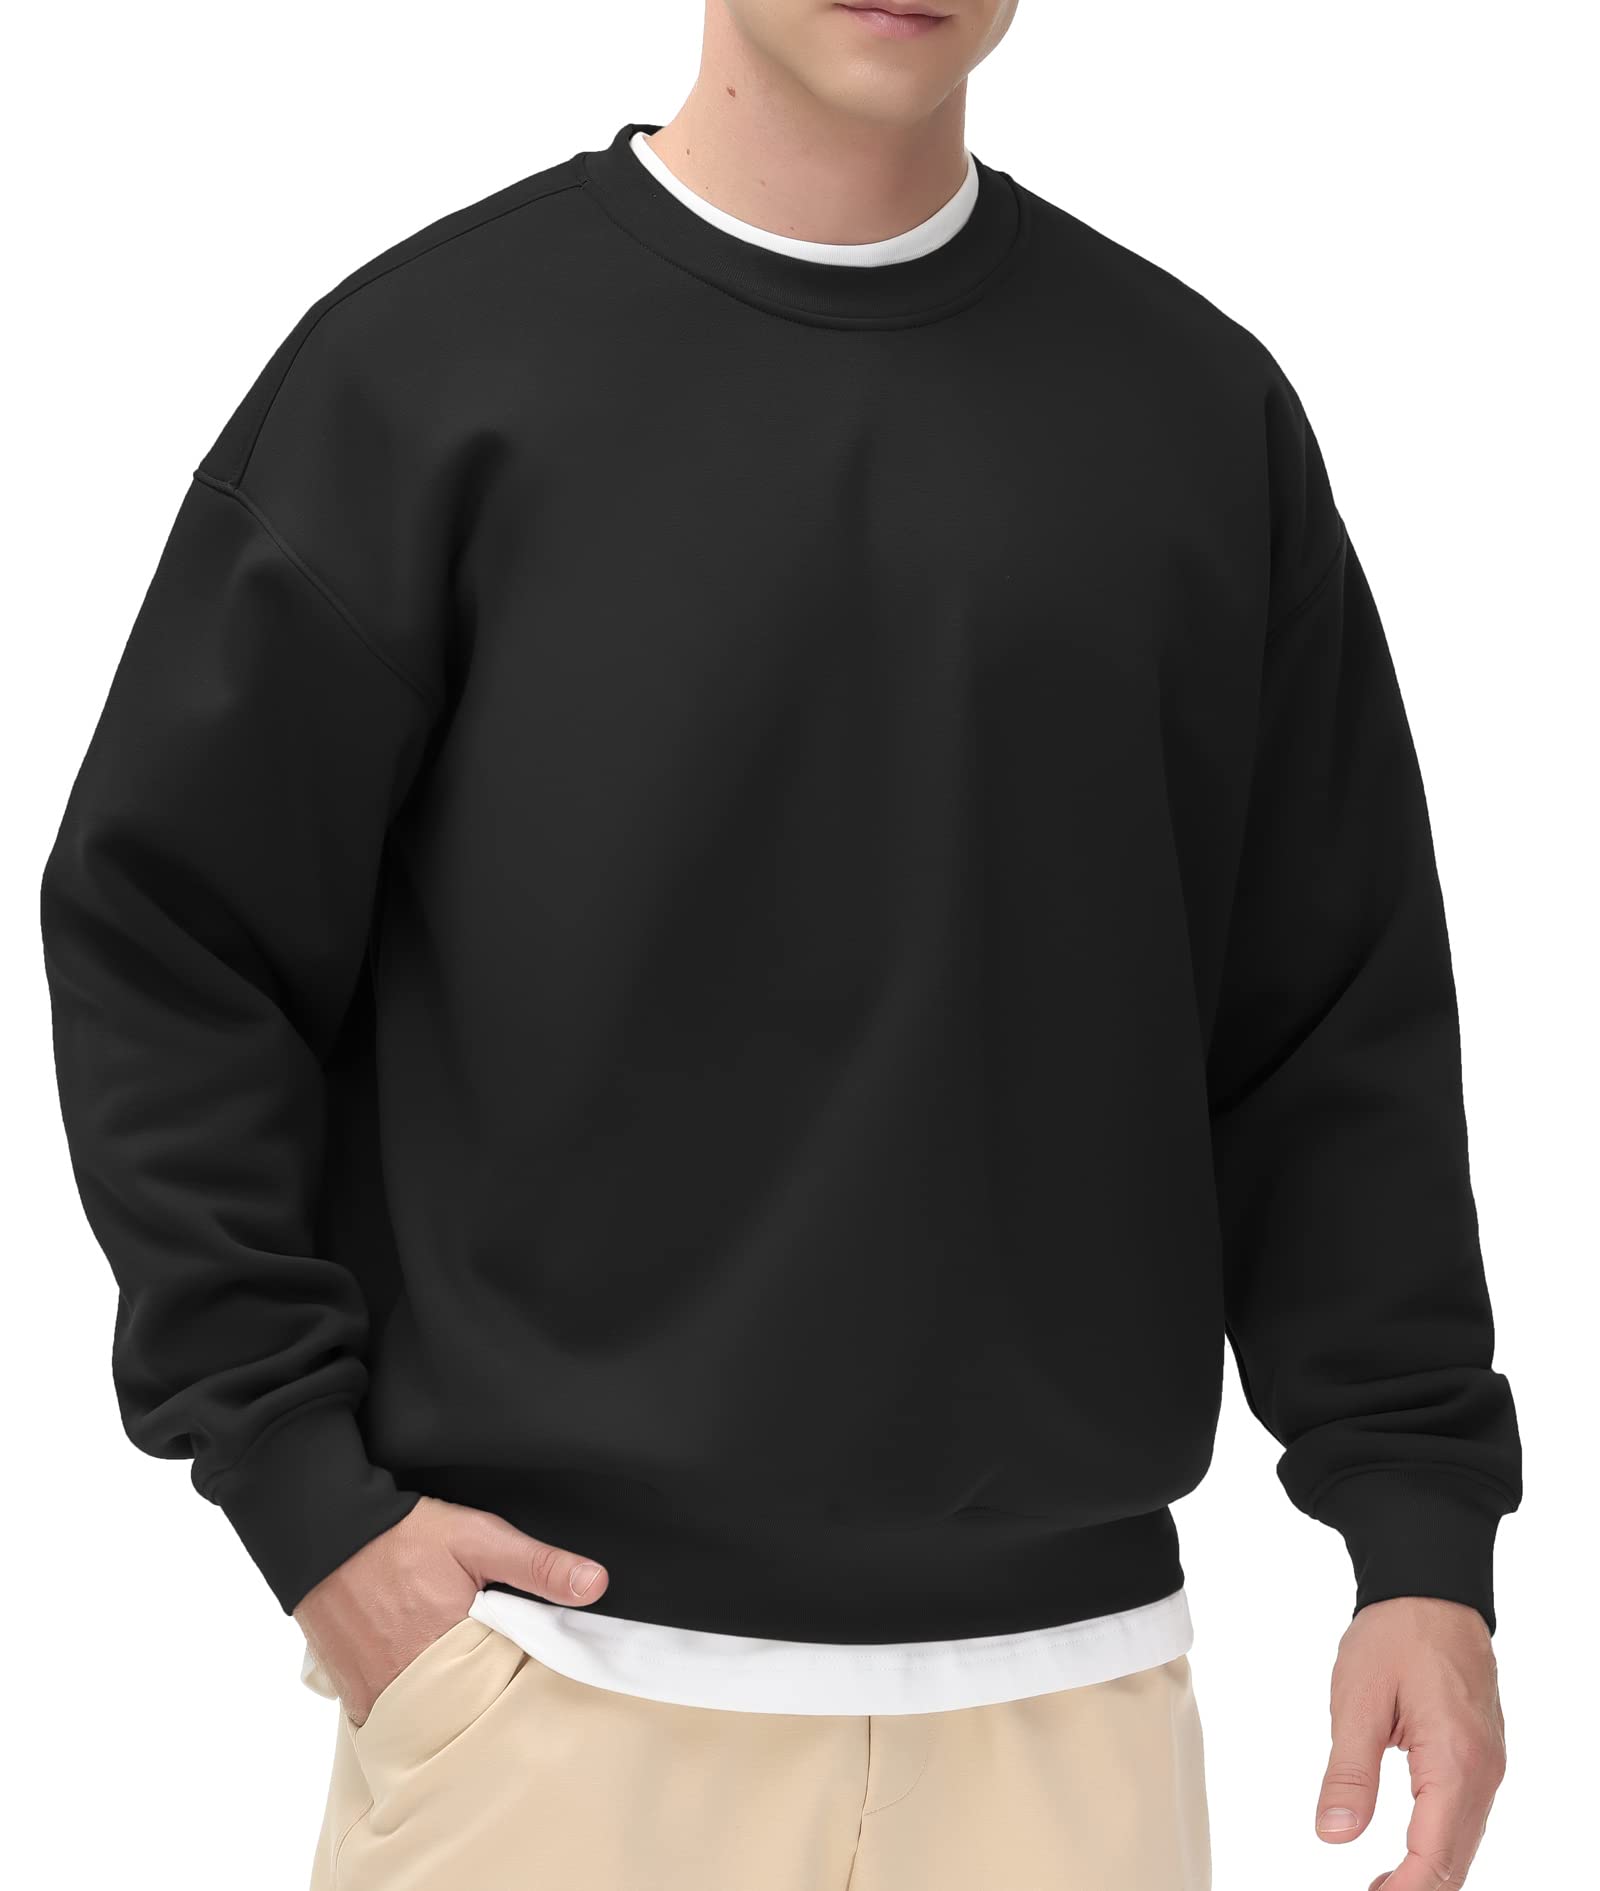 THE GYM PEOPLE Men's Fleece Crewneck Sweatshirt Thick Loose fit Soft Basic Pullover  Sweatshirt Black Large